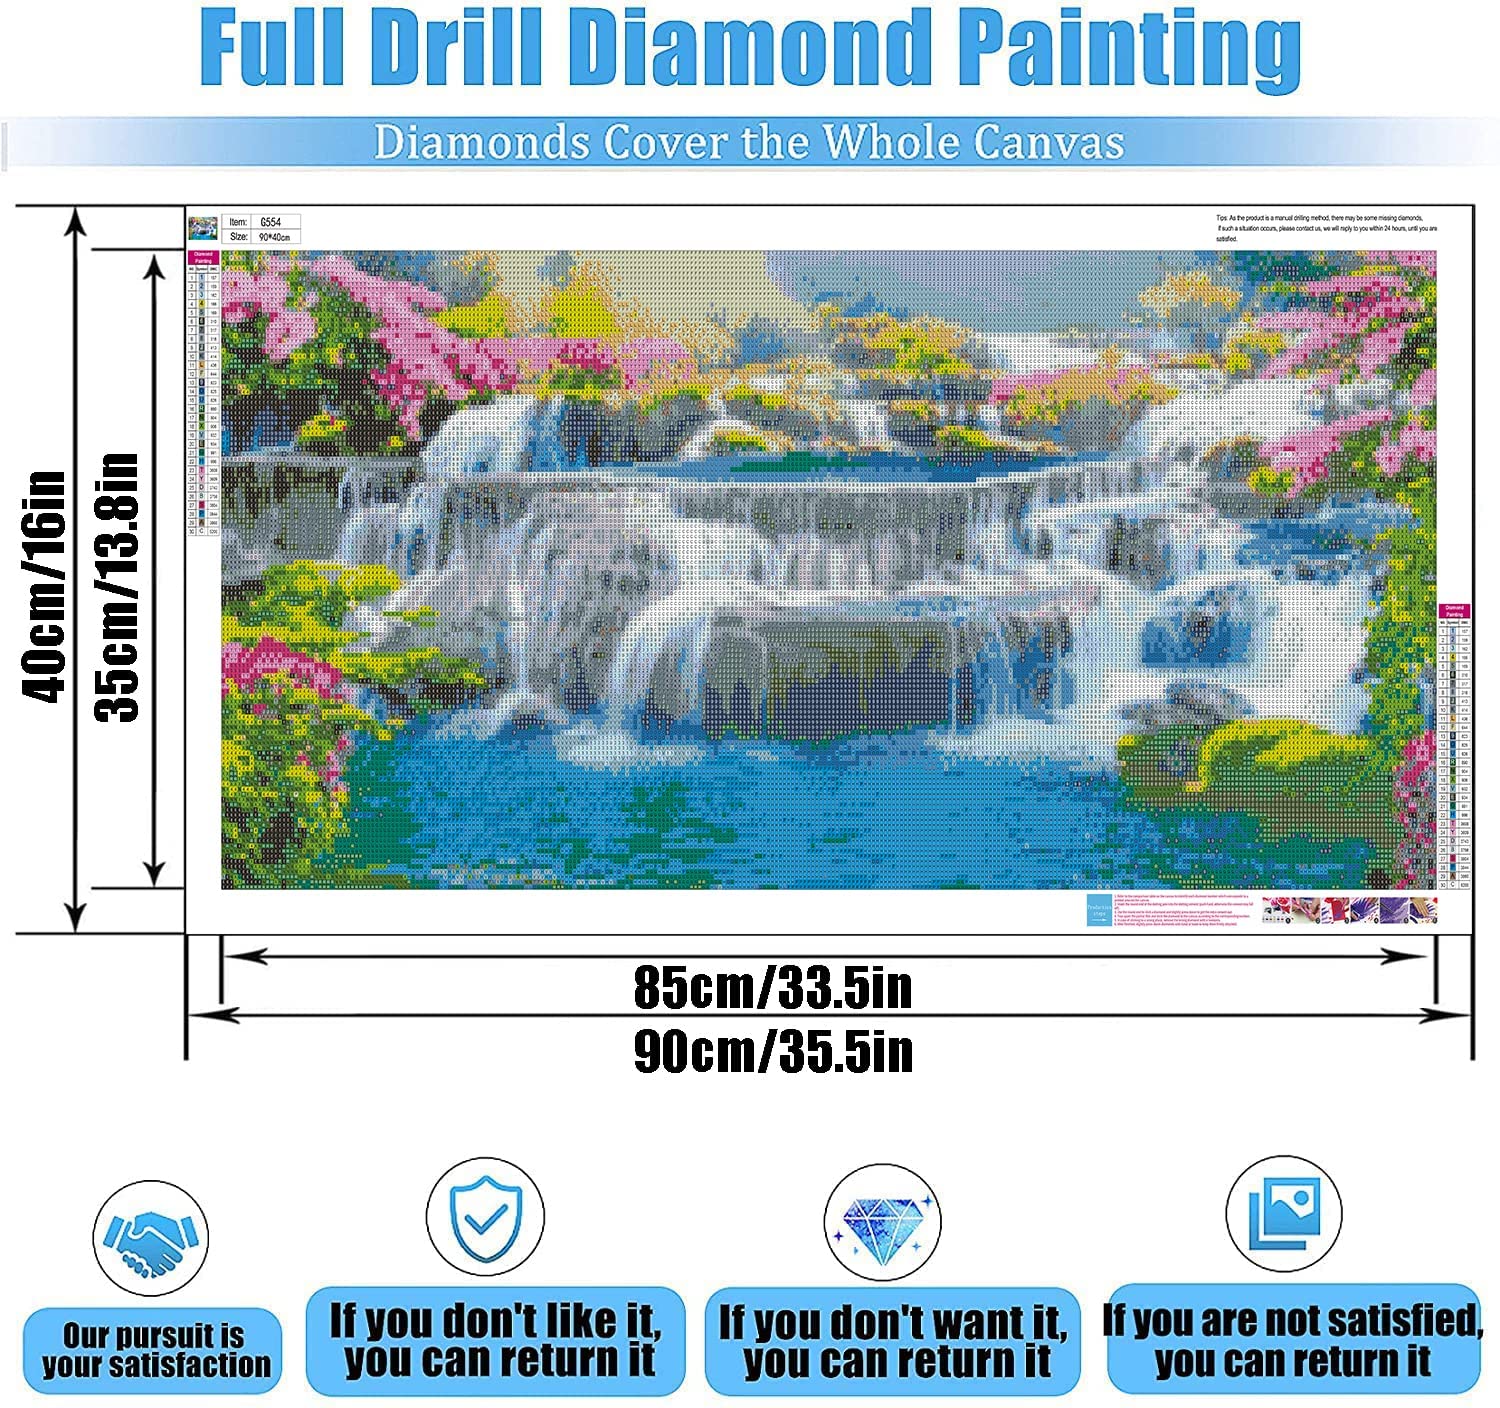 DIY 5D Diamond Painting Kits for Adults,HTOOQ Large Diamond Painting Full  Drill Round Diamond Dots Waterfall Scenery ,Diamond Art Kits for Adults  Home Wall Decor 35.4x15.HTOOQ inch 